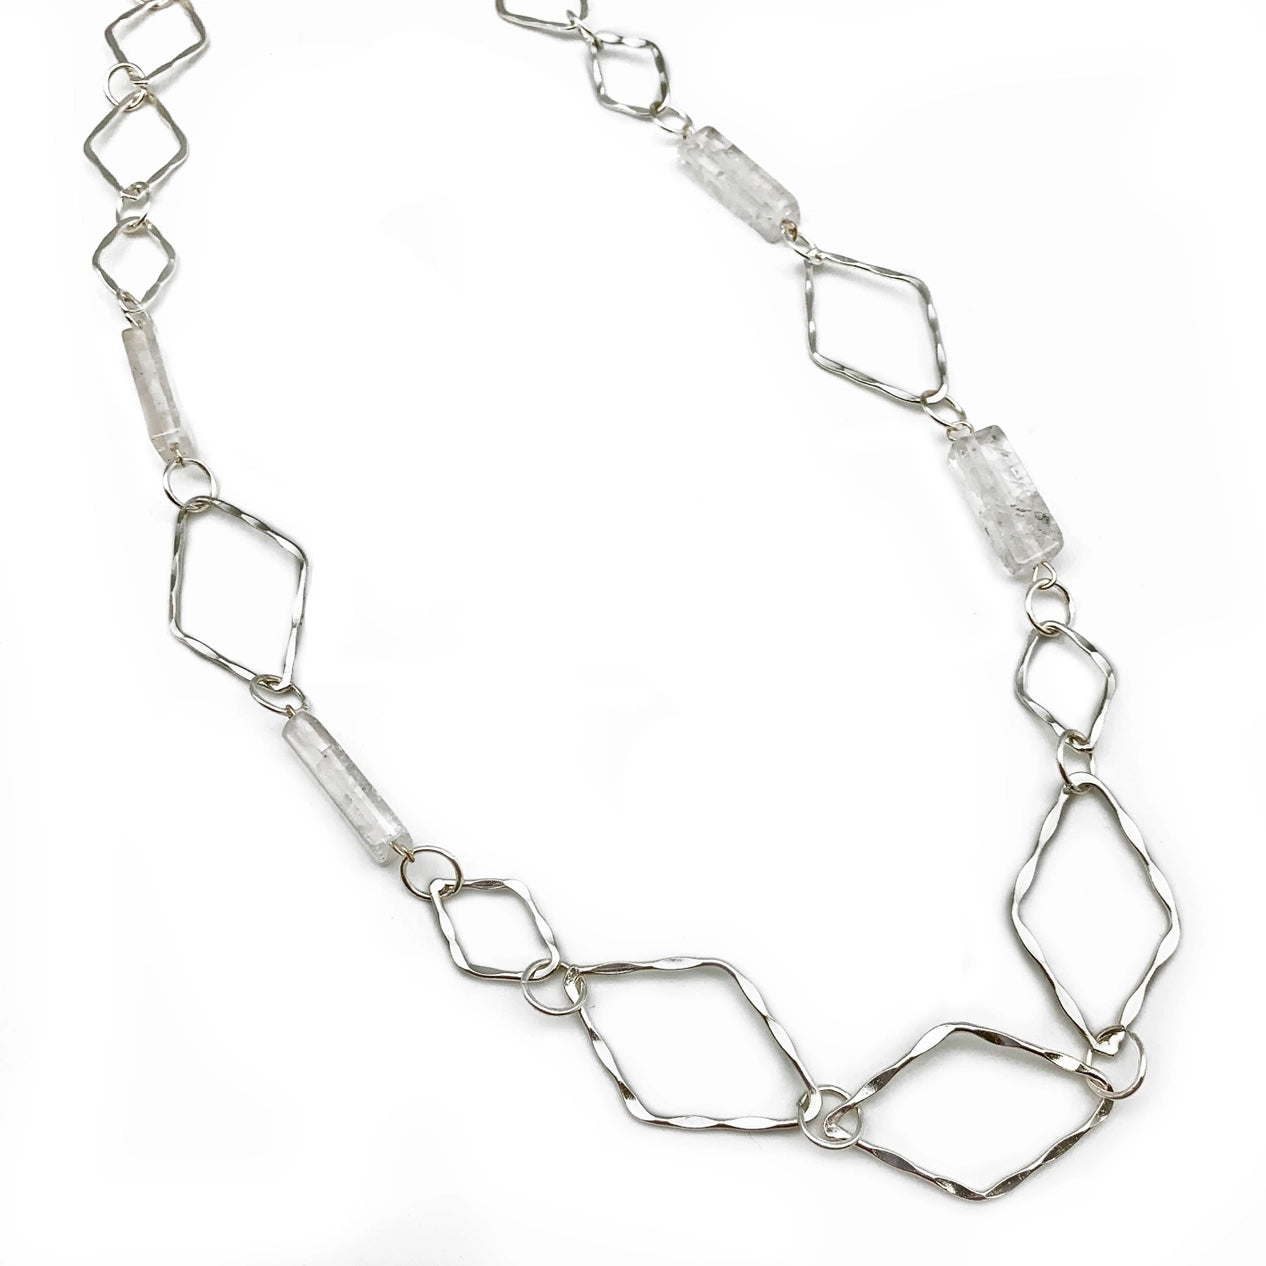 Anju Jewelry Silver and Quartz Necklace